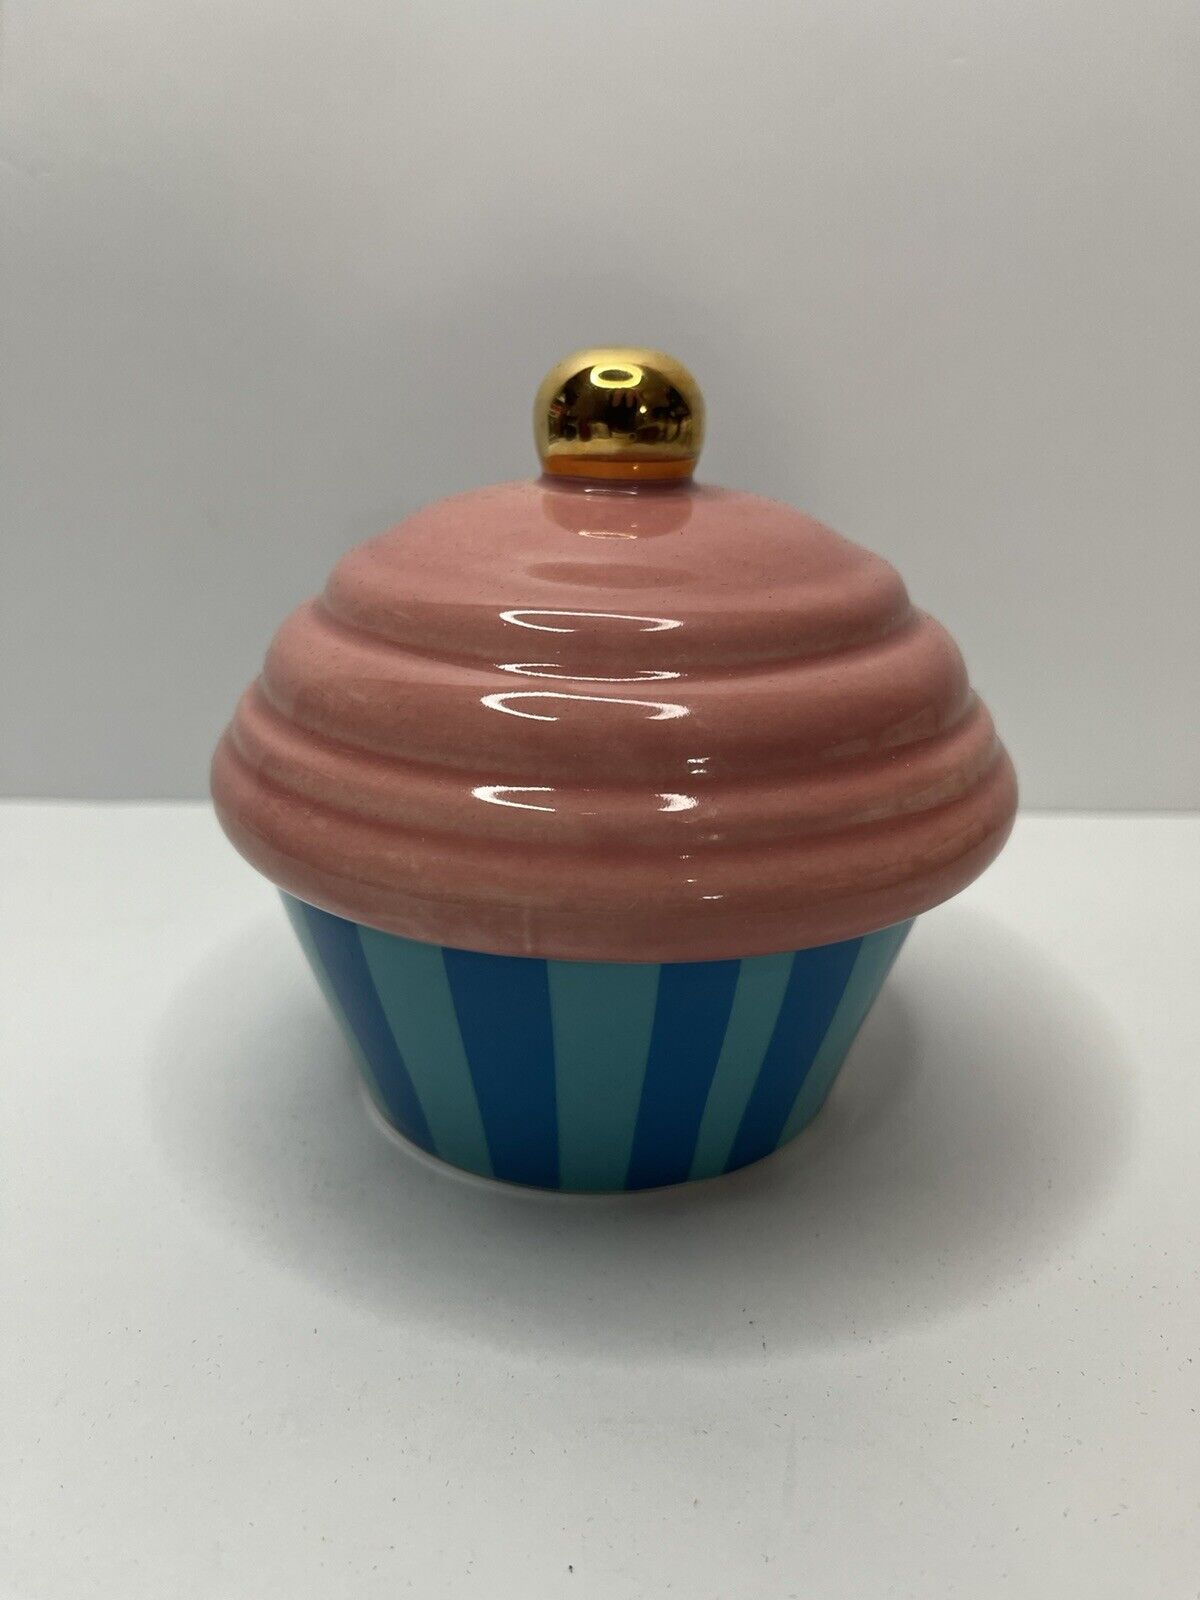 Betsey Johnson Trolls Cupcake Trinket Bowl